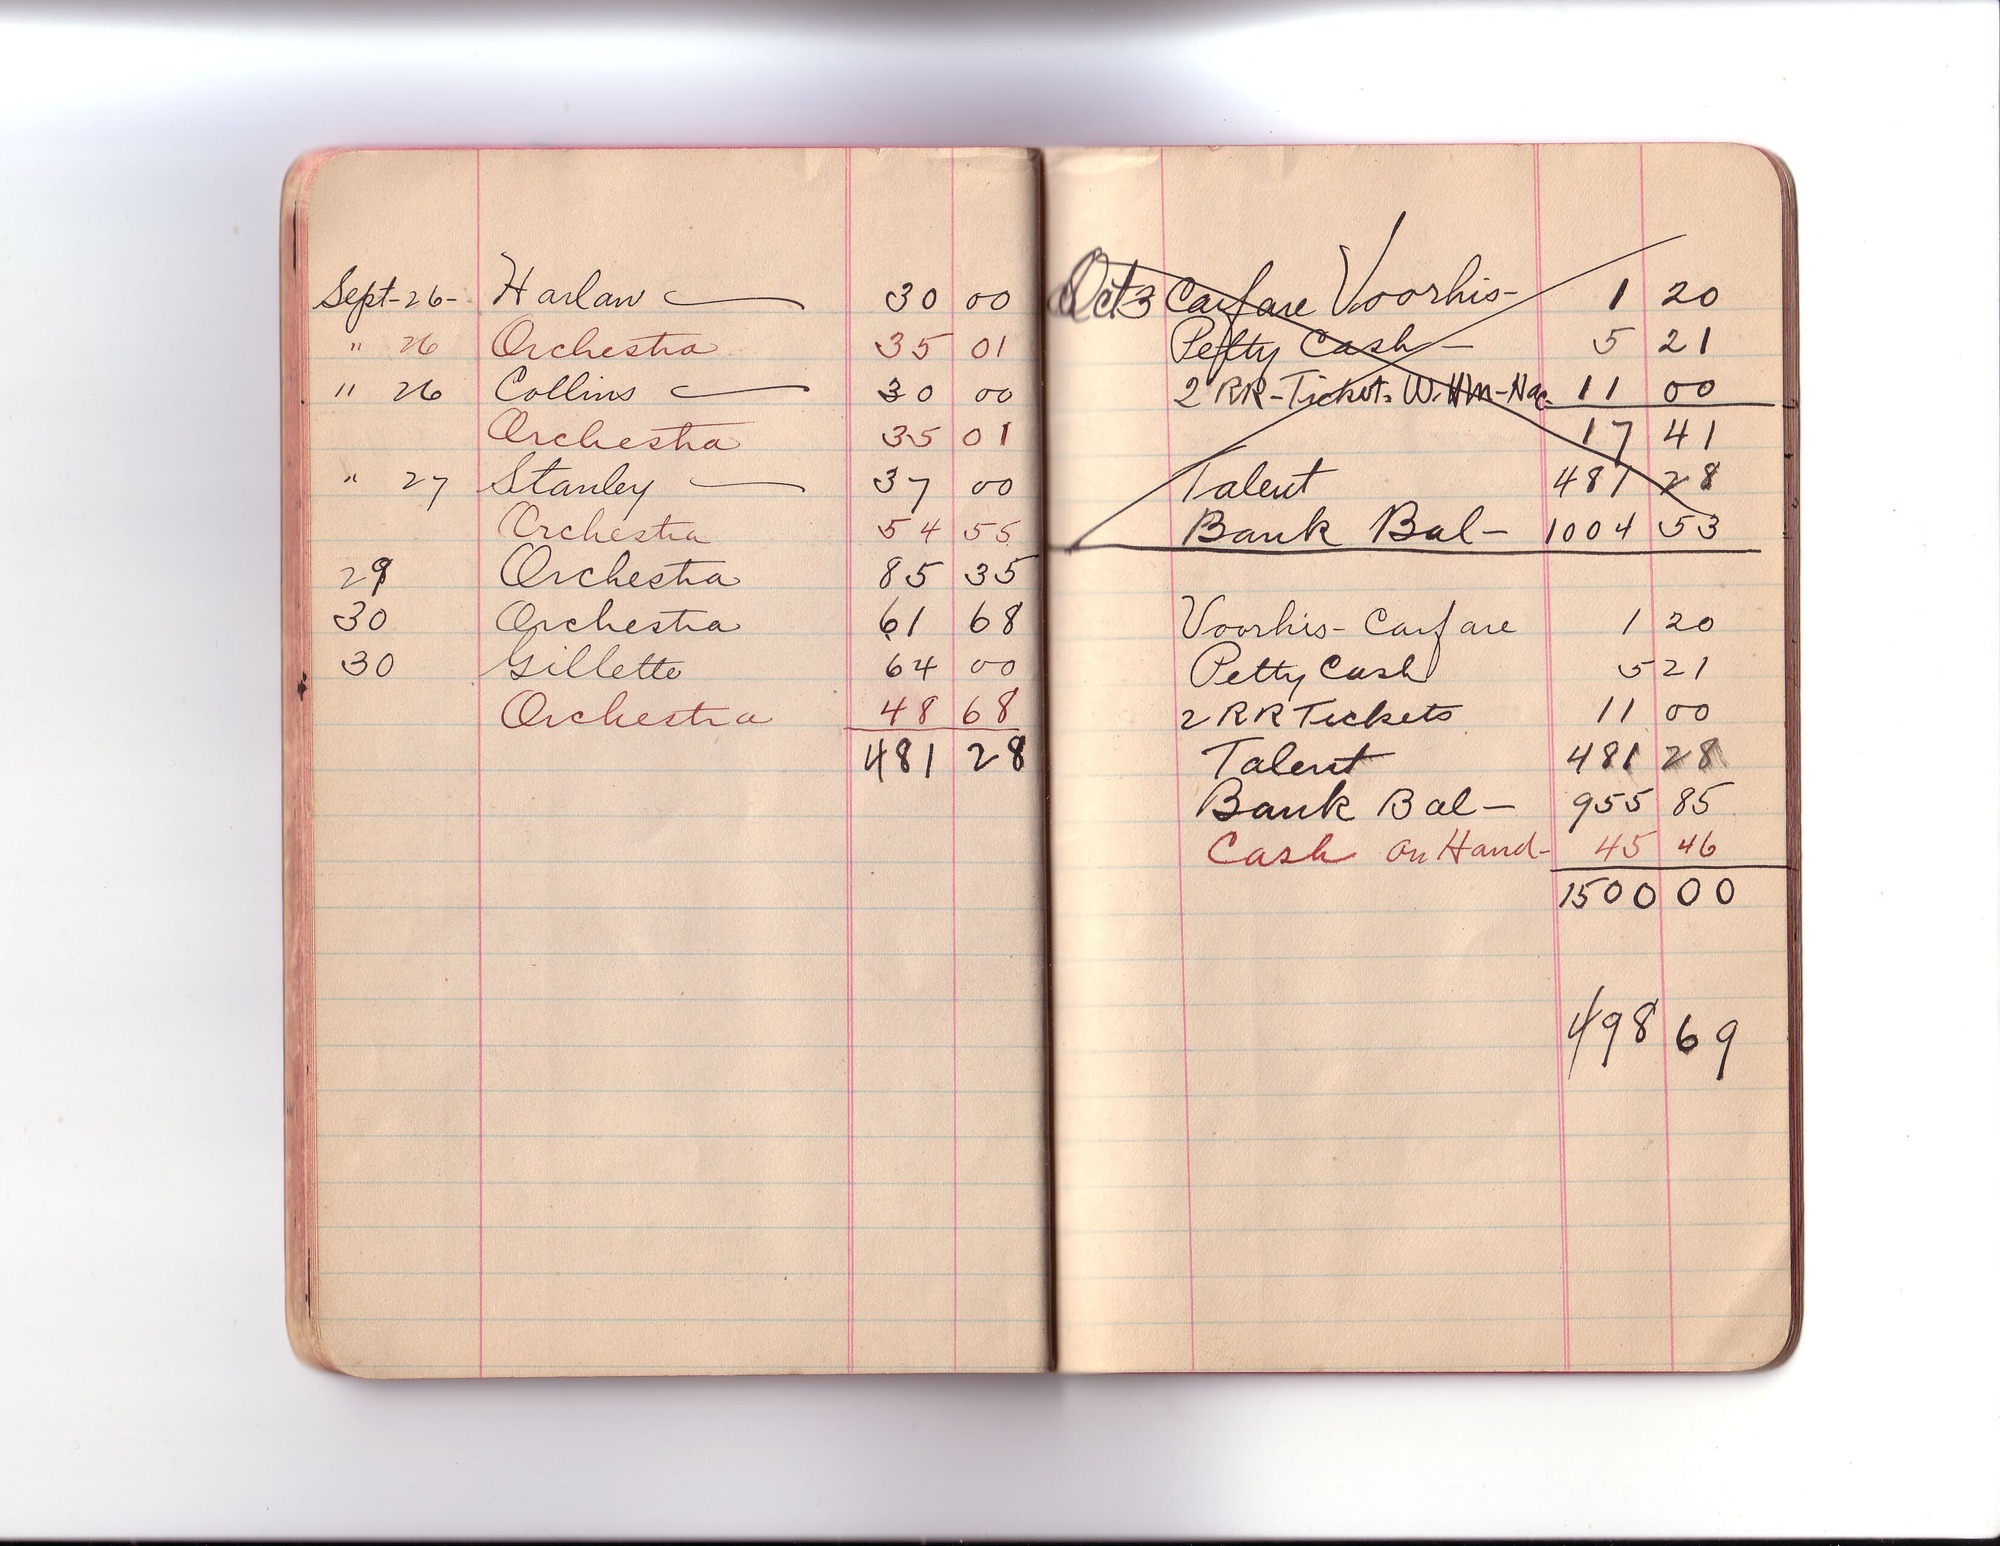 Thomas Edison's New York City Recording Studio Cash Book 01 (of 21), Image 29 (of 41).